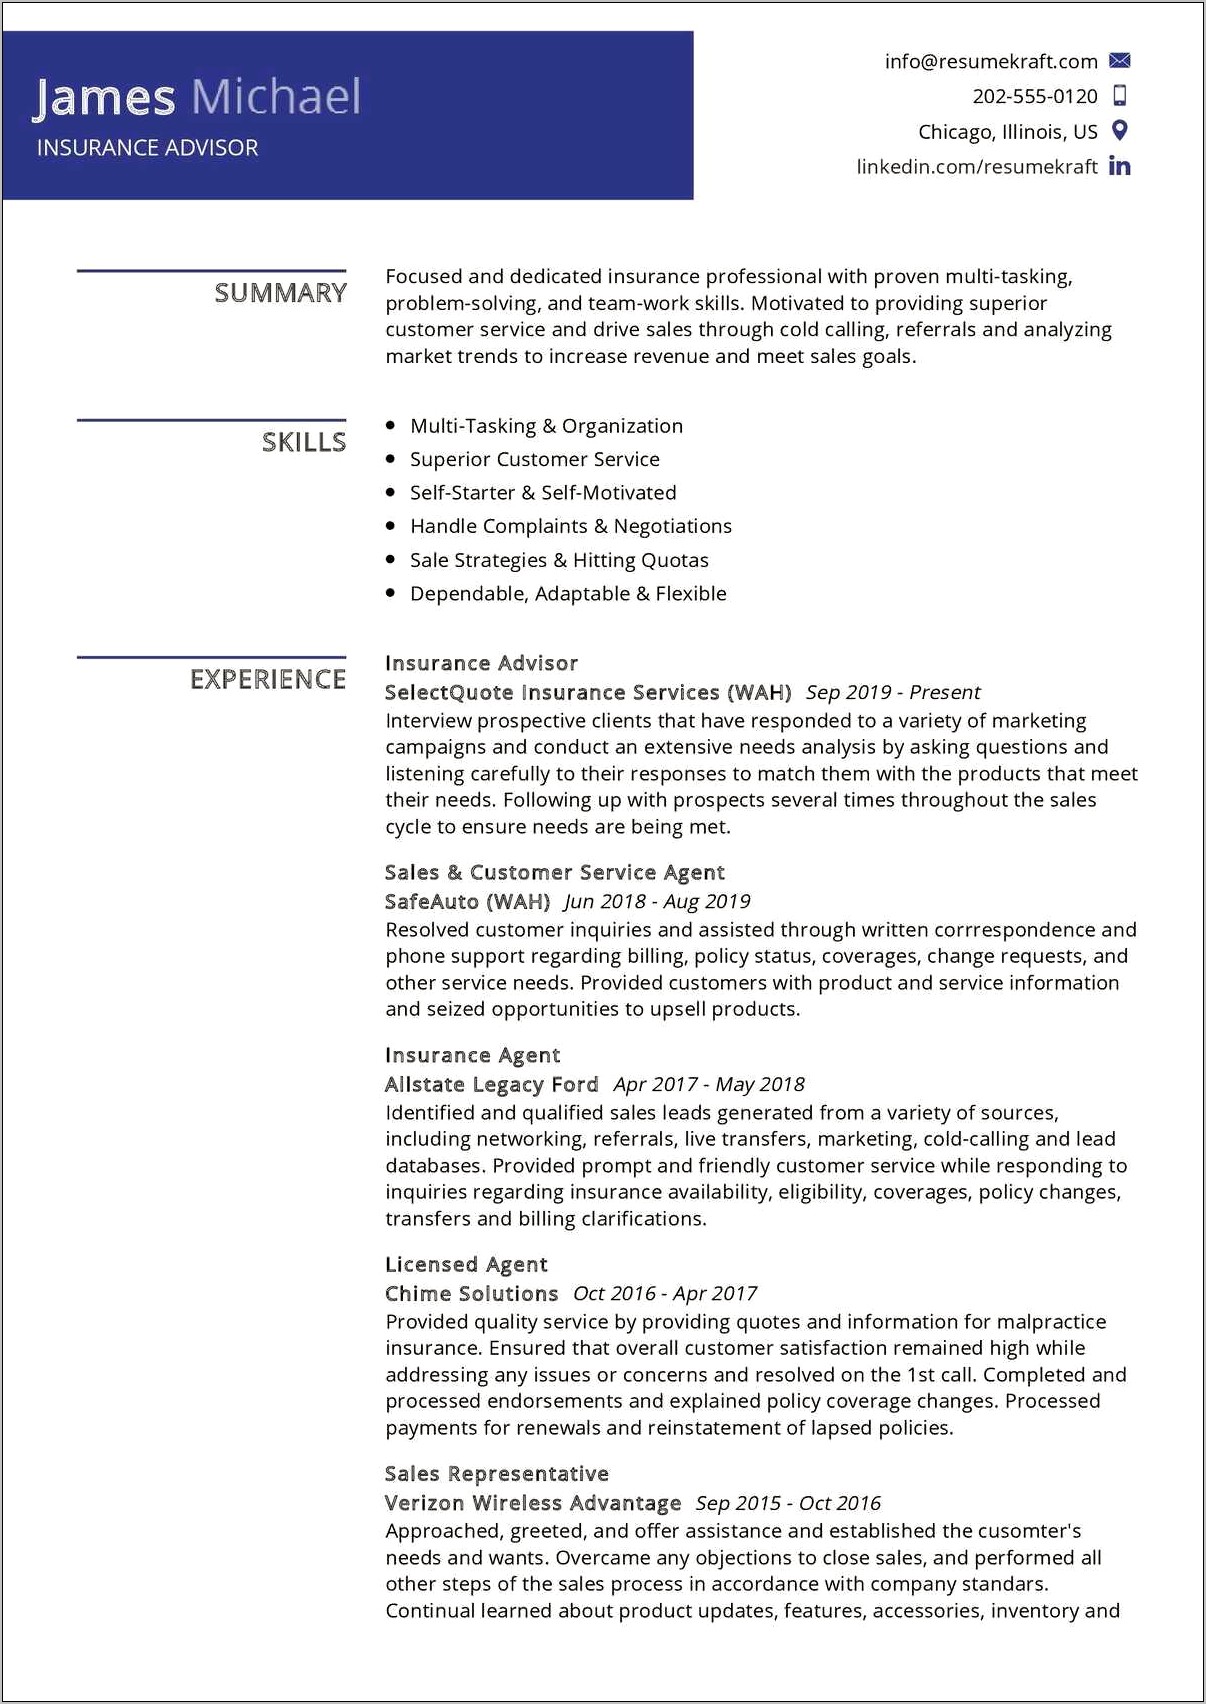 Resume Quotes For Organization Skills